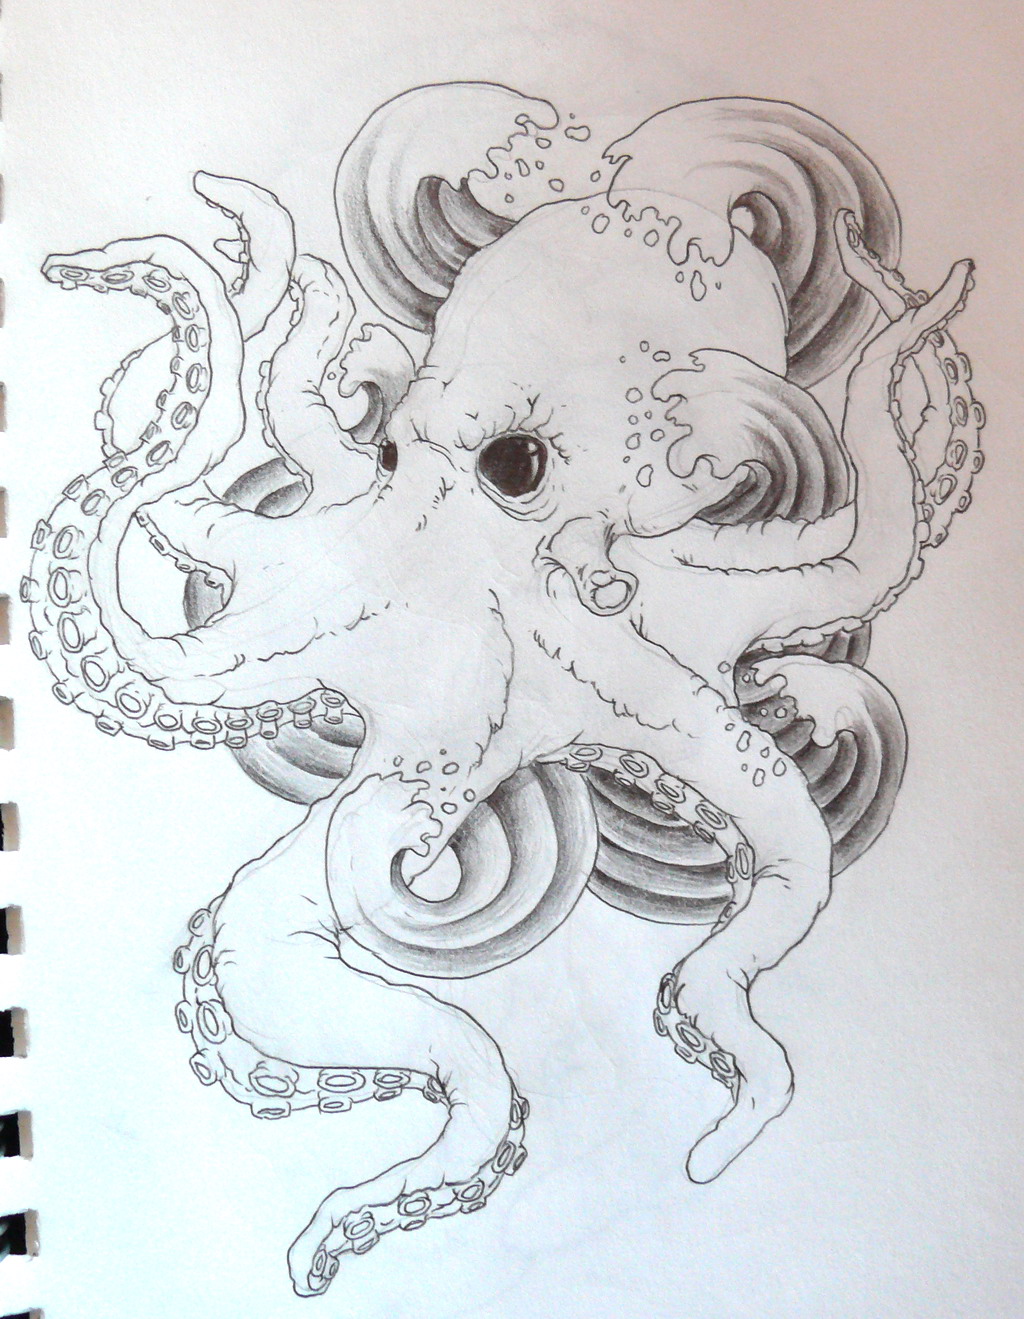 Black-eyed octopus in swirly water tattoo design by Zioman